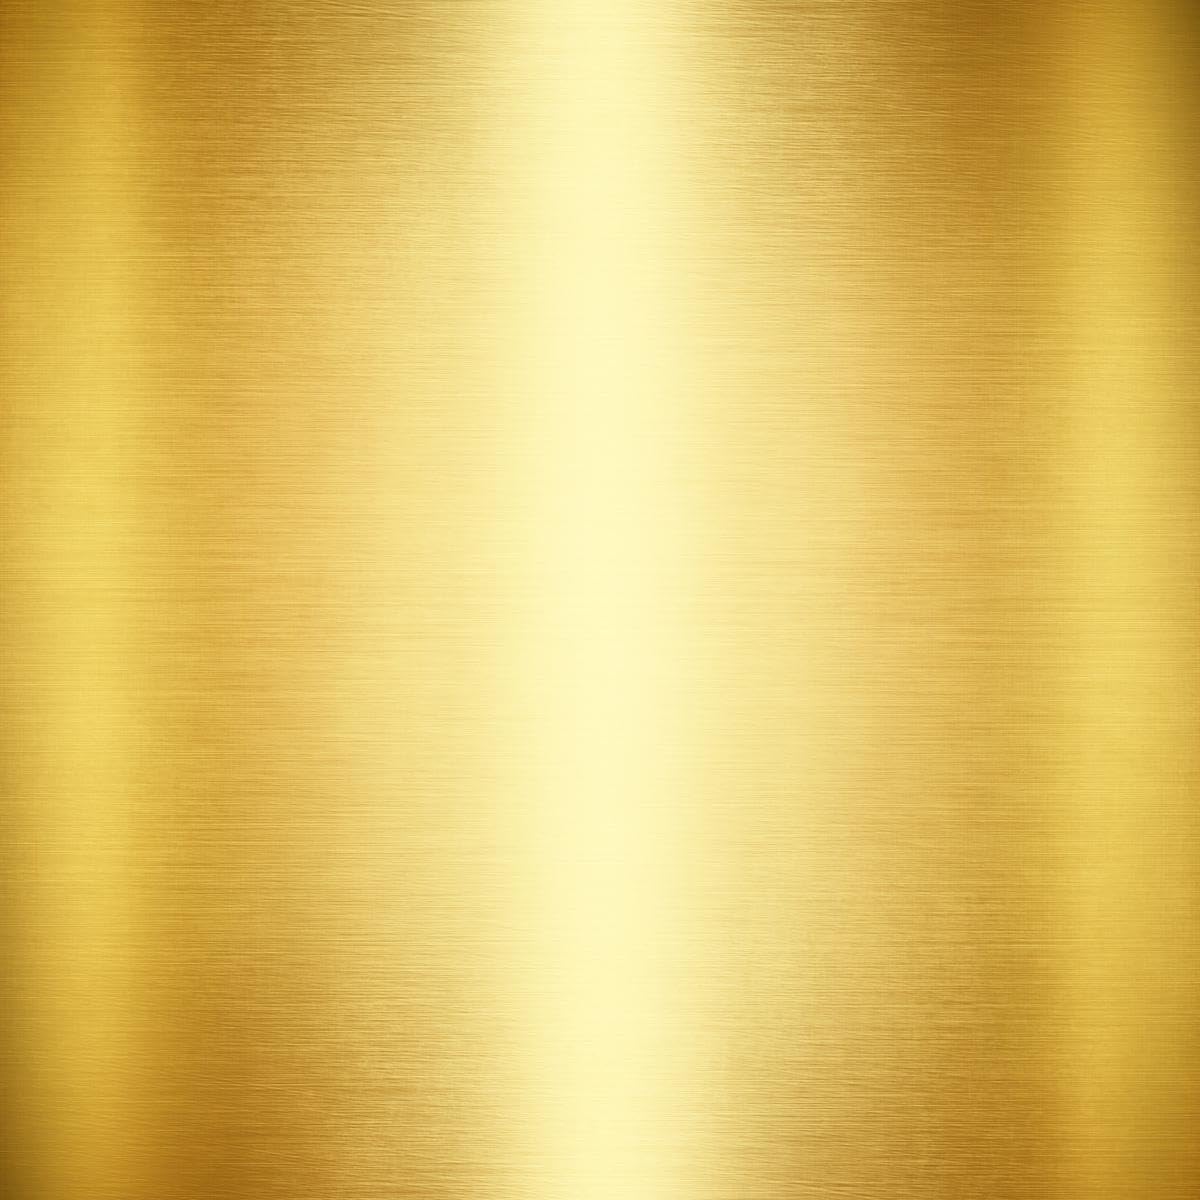 Matthews Fan JD-GOLD-MTL Jarold Direcional ceiling fan in Ouro (Gold) finish with metal blades.